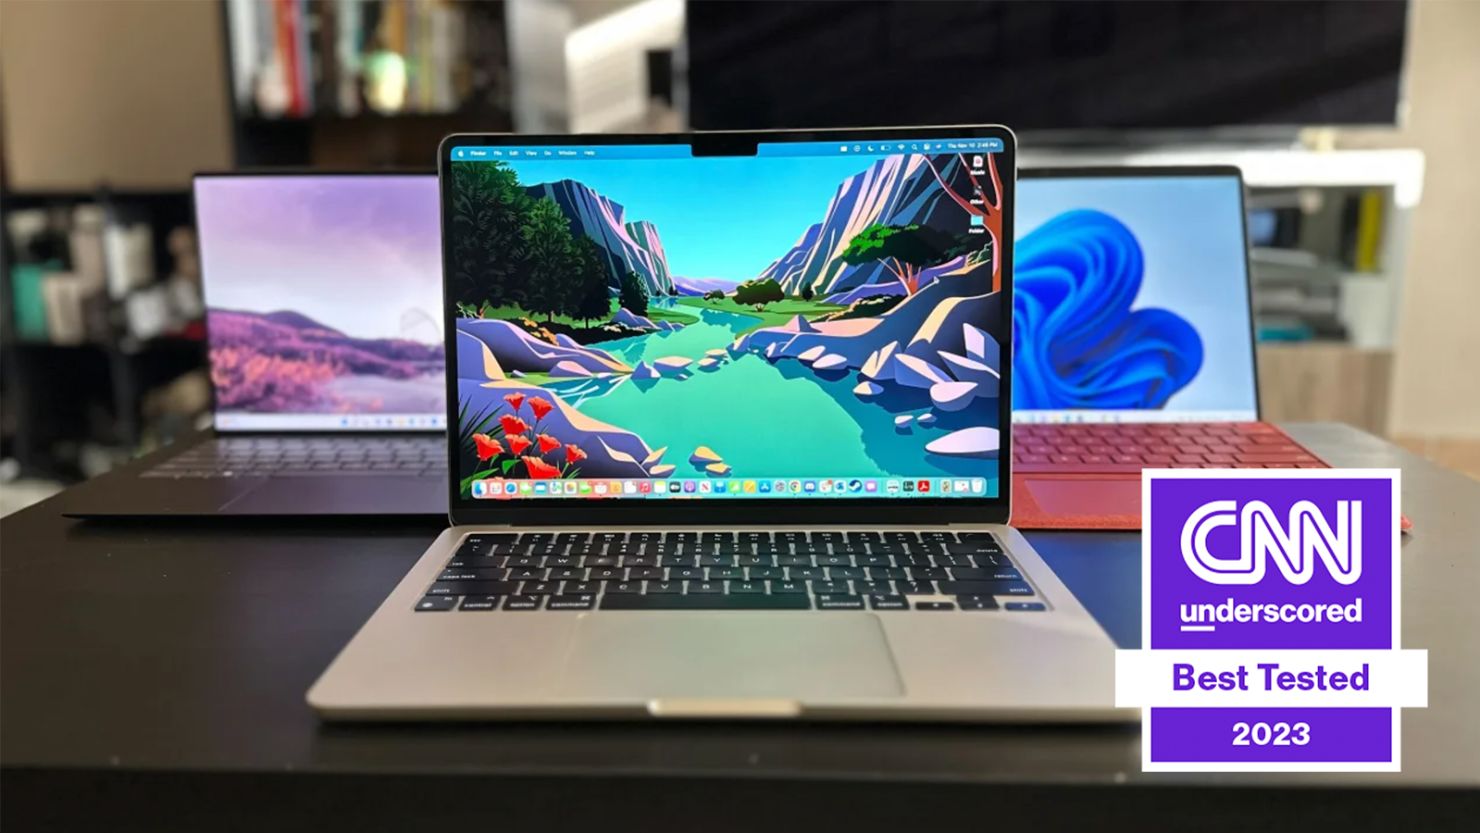 M1 Macs Support WiFi 6, MacBook Air Has Updated Function Keys